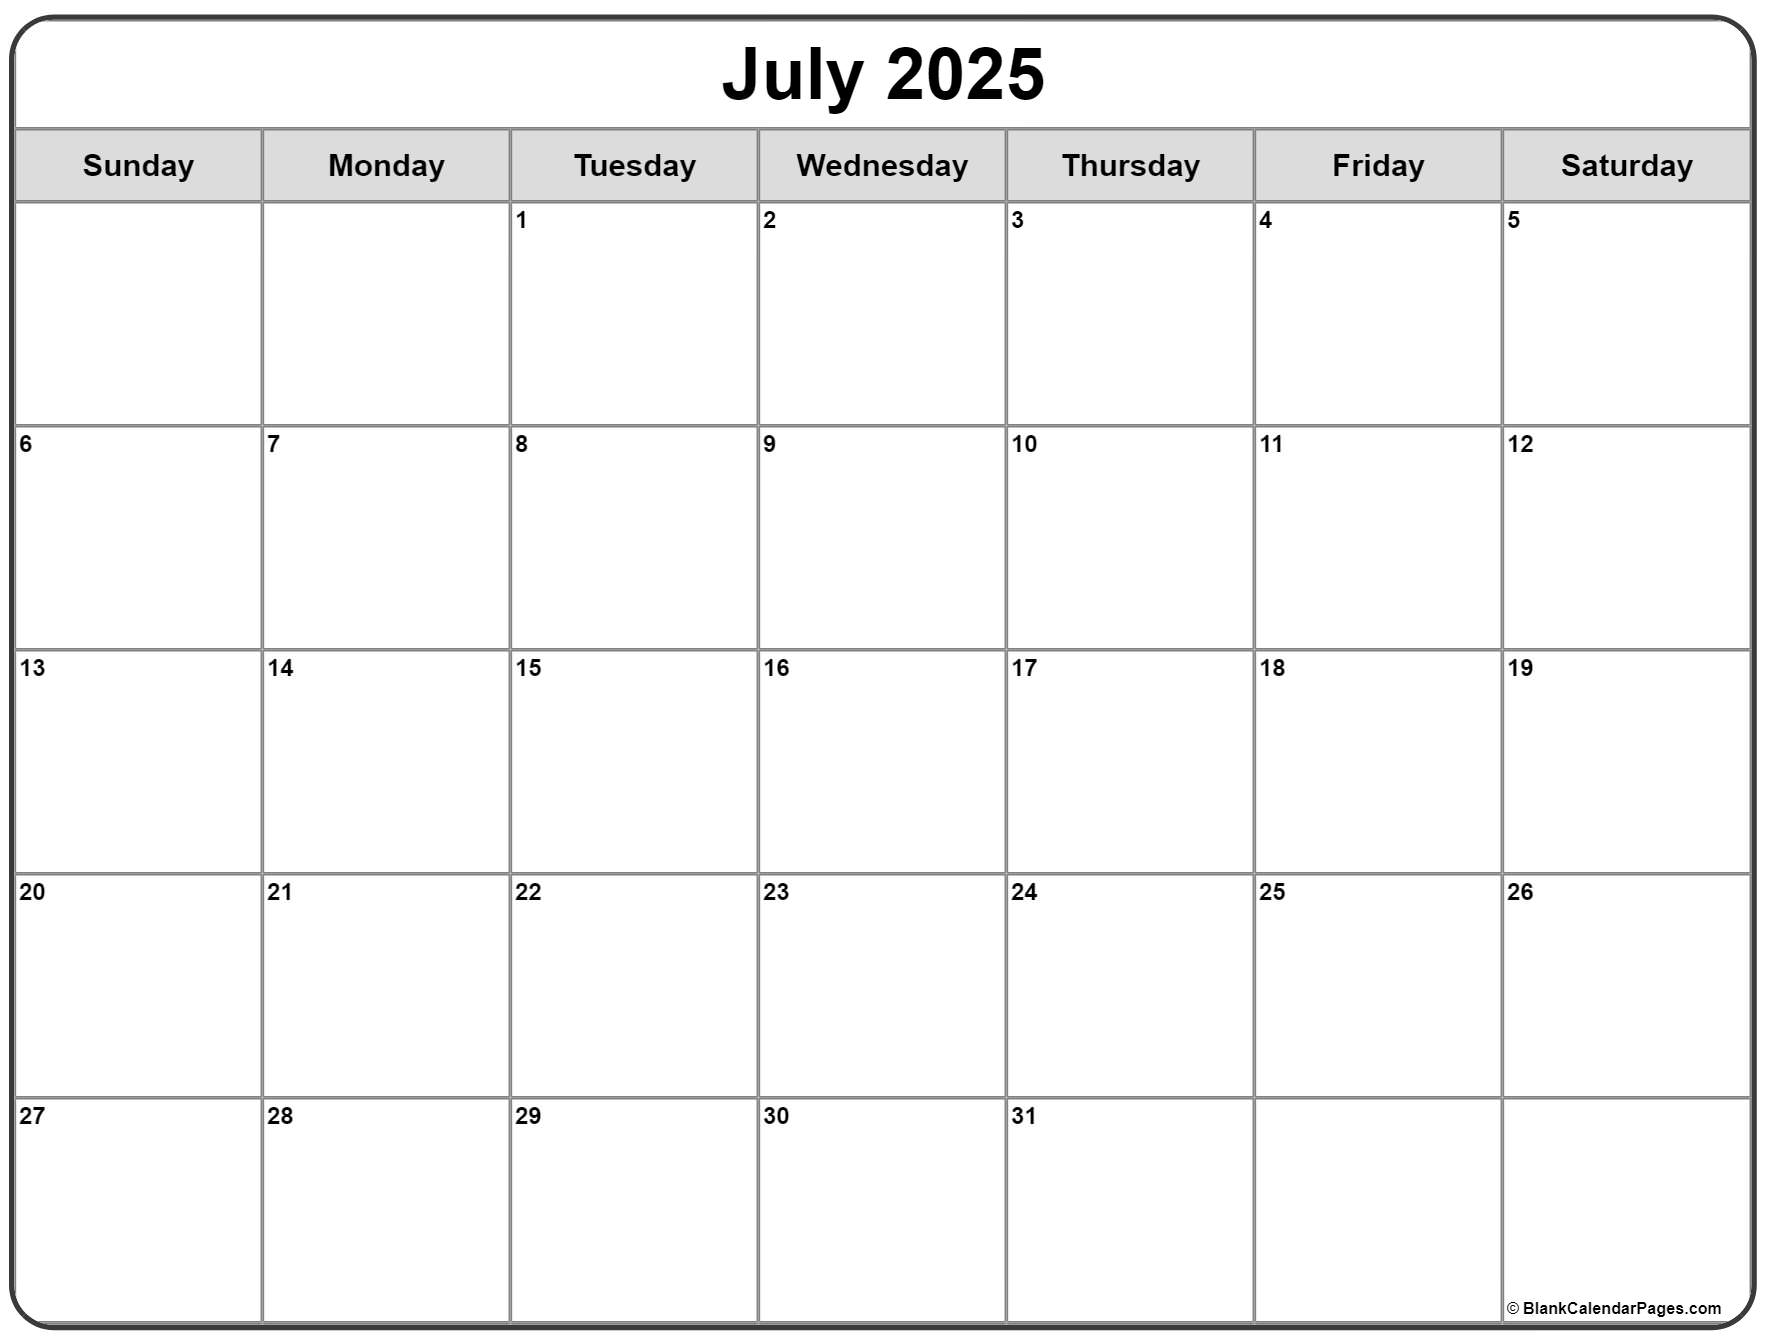 July 2025 calendar free printable calendar